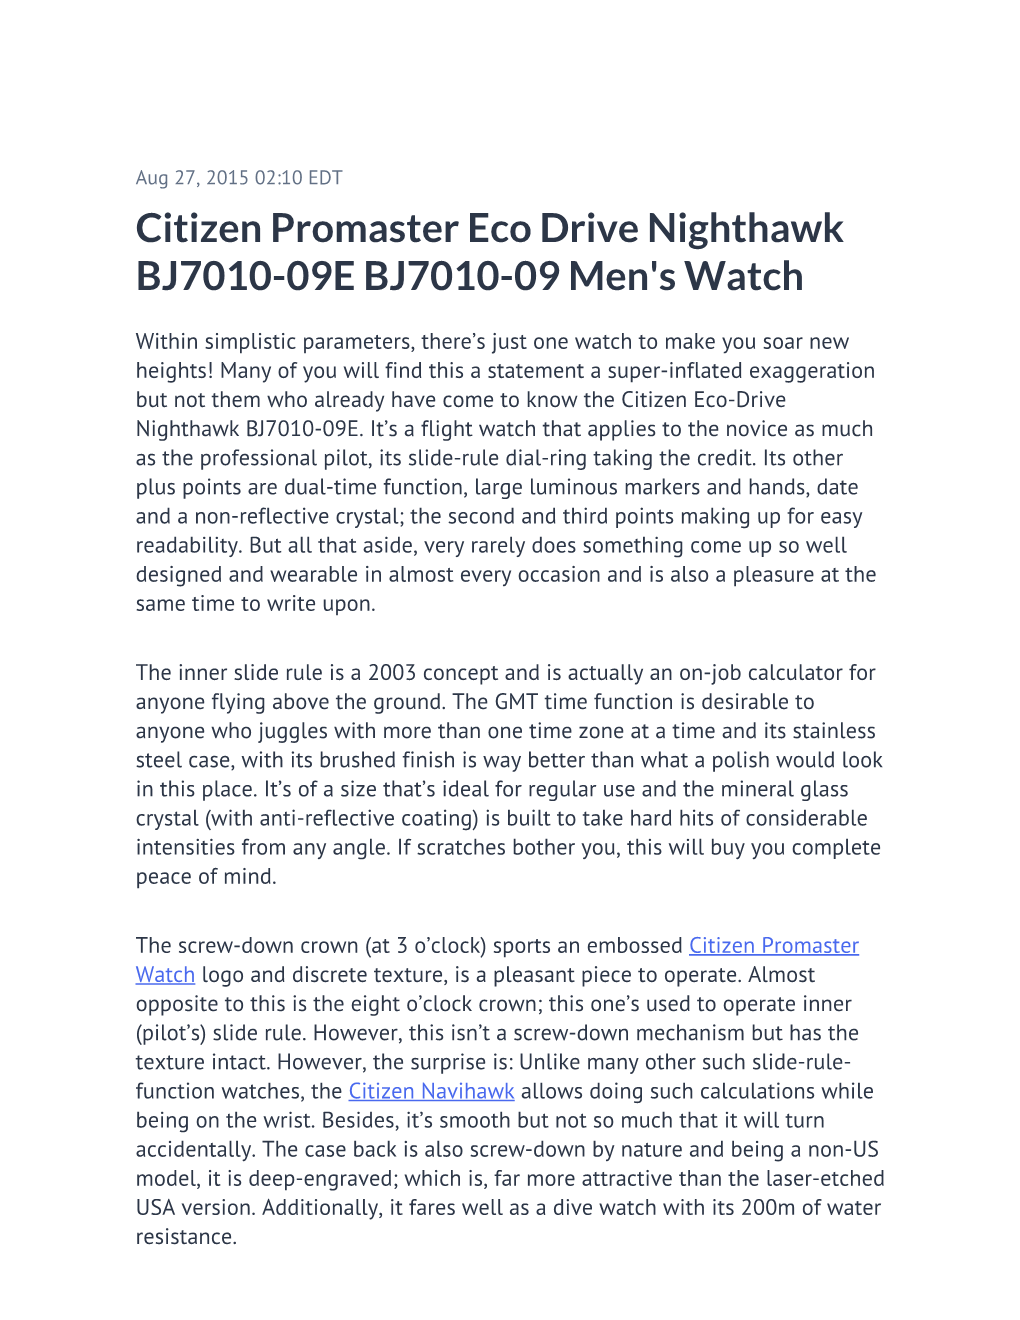 Citizen Promaster Eco Drive Nighthawk BJ7010-09E BJ7010-09 Men's Watch